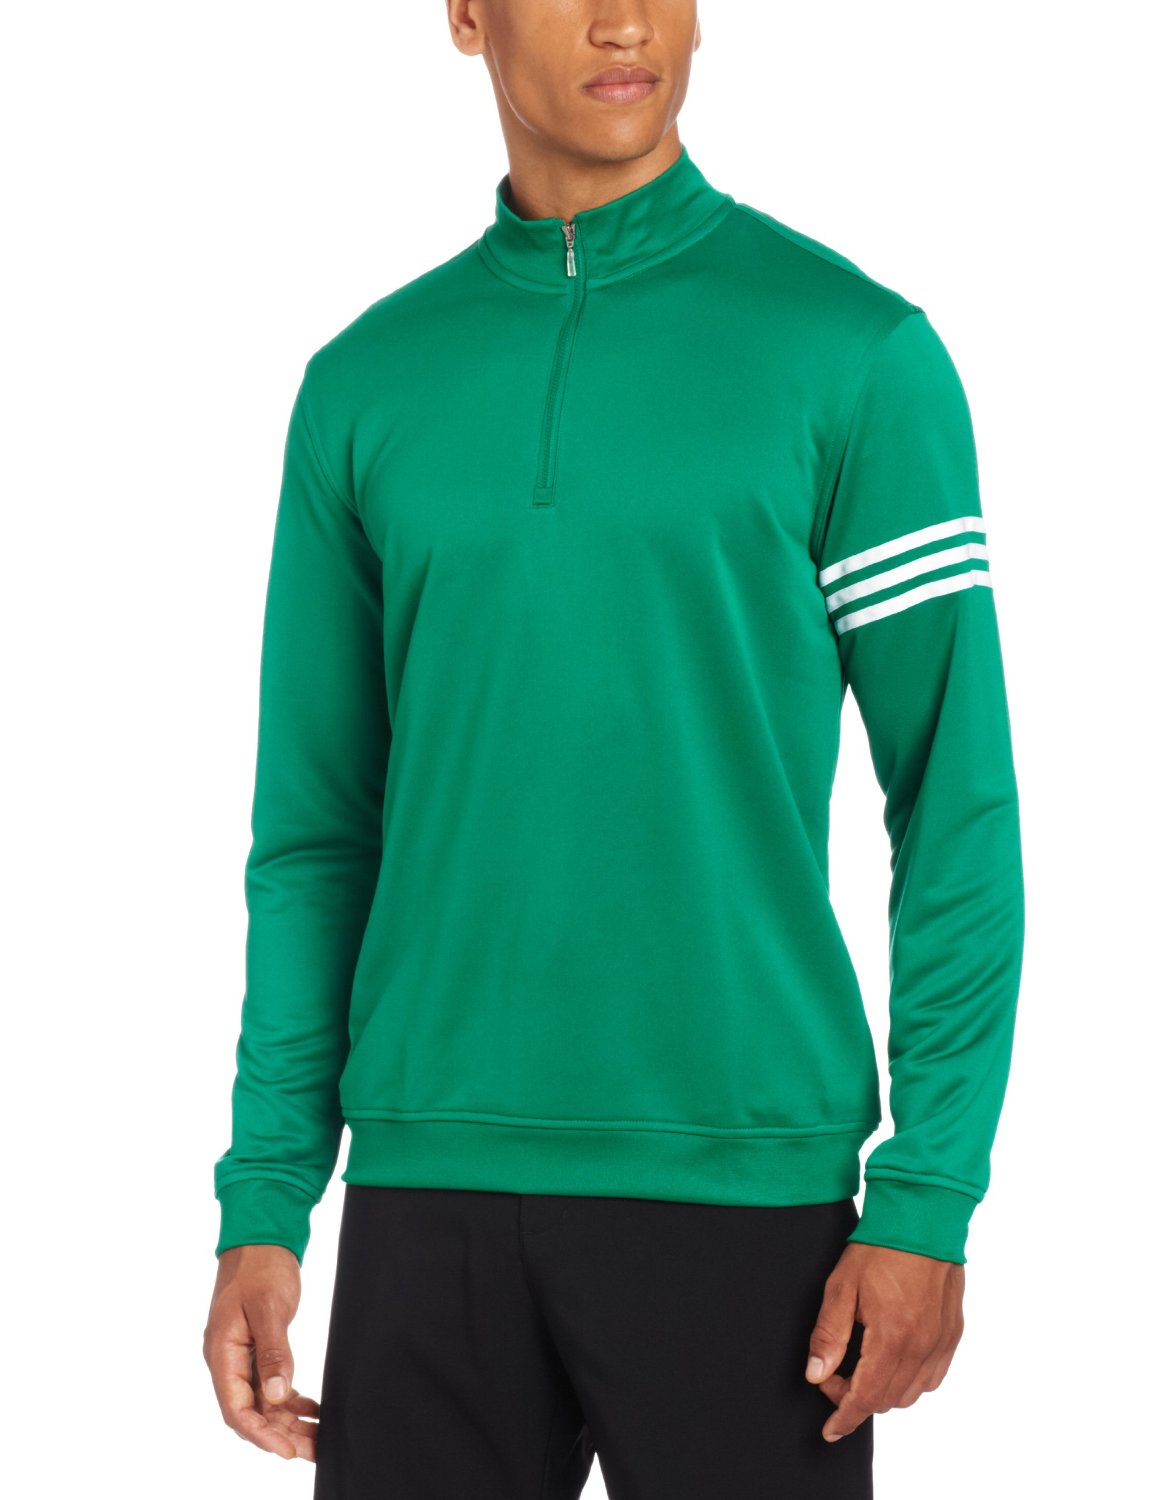 Adidas Climalite Long Sleeve/Layering Golf Pullovers